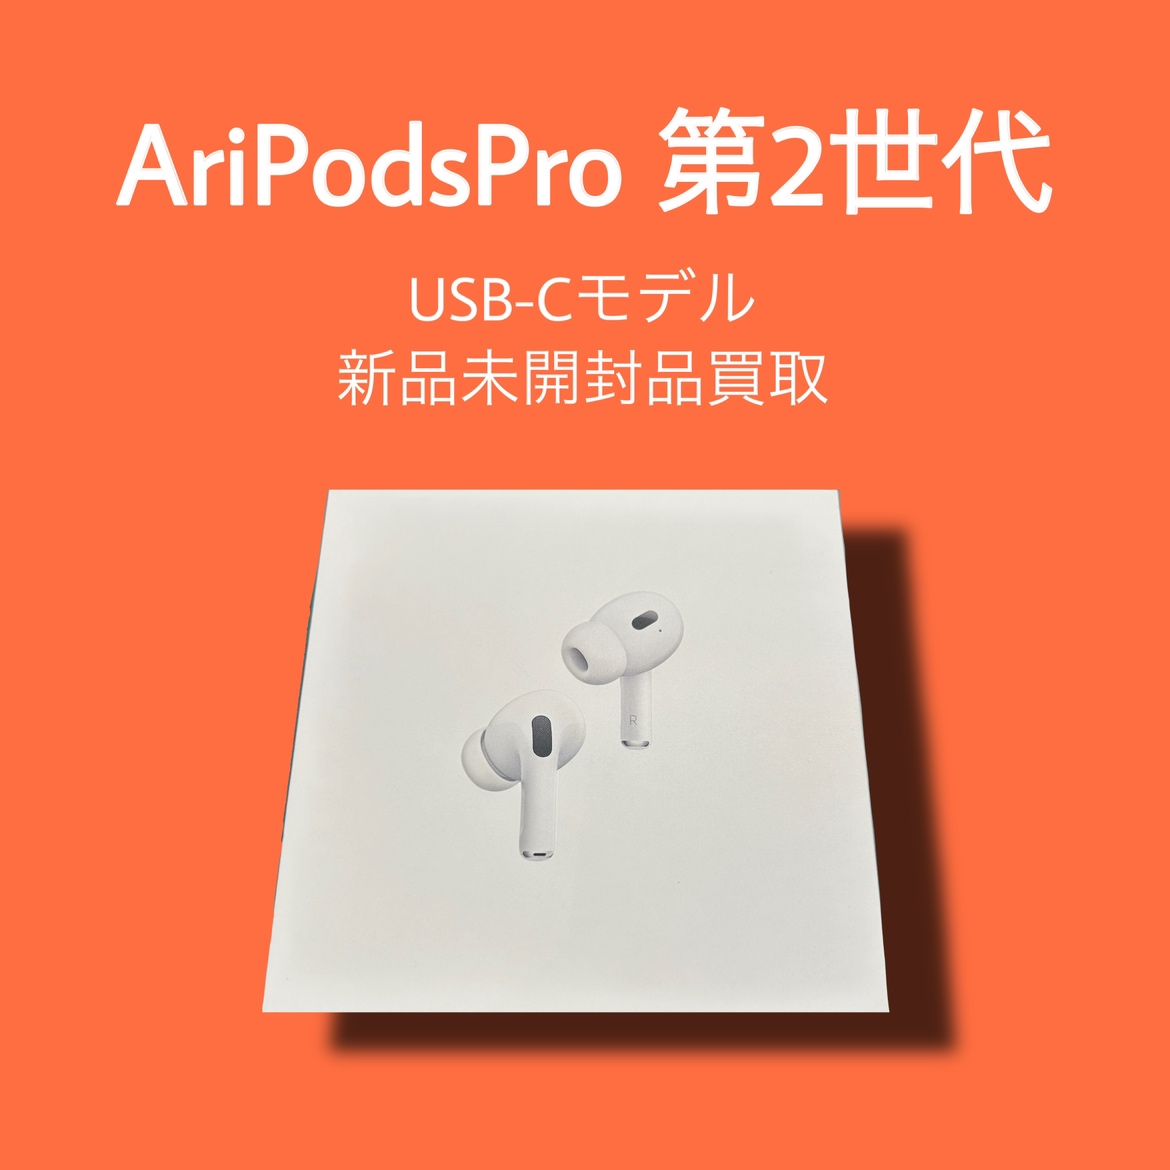 AirPodsPro第二世代・USB-Cモデル・新品開封済【天神地下街店】